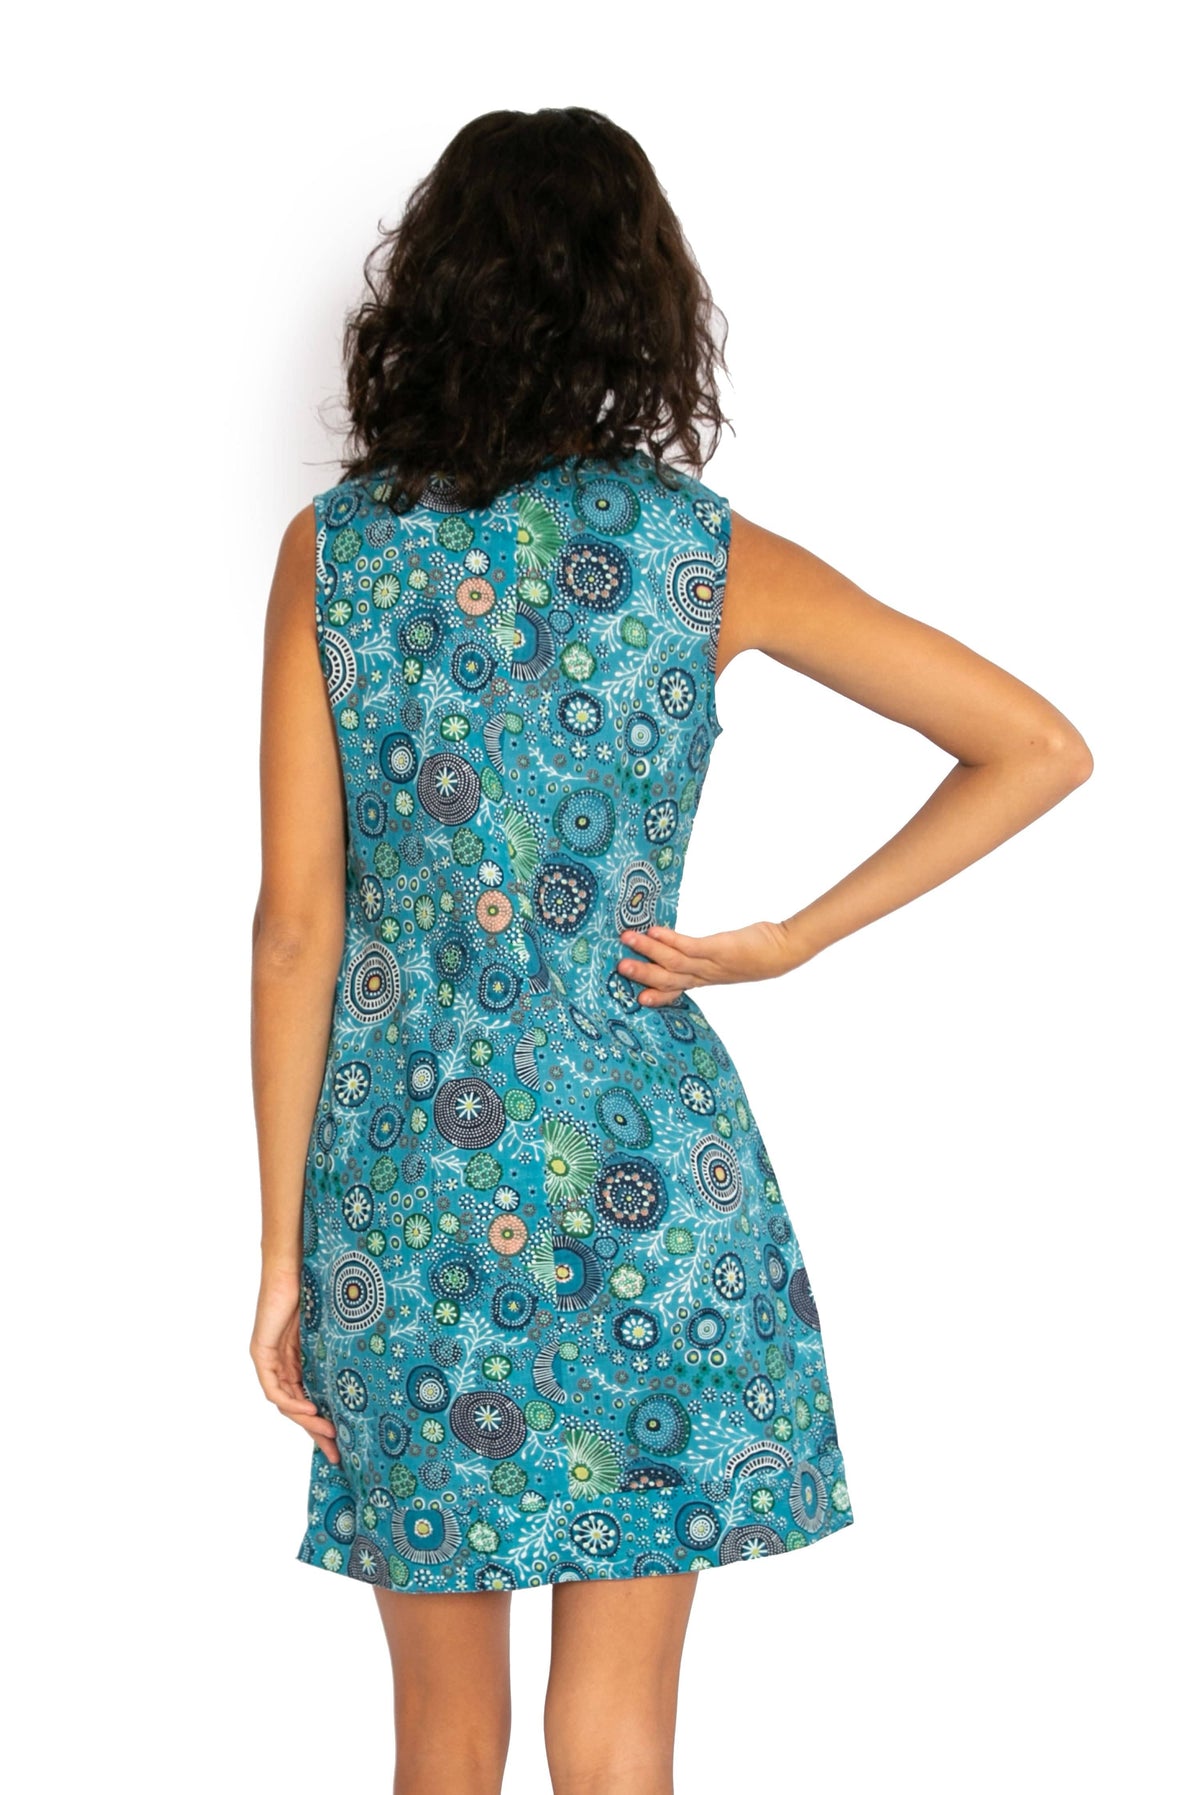 Hai Dress - Coral Garden* - OM Designs - Splash Swimwear  - dresses, May23, OM Designs, Womens, womens clothing - Splash Swimwear 